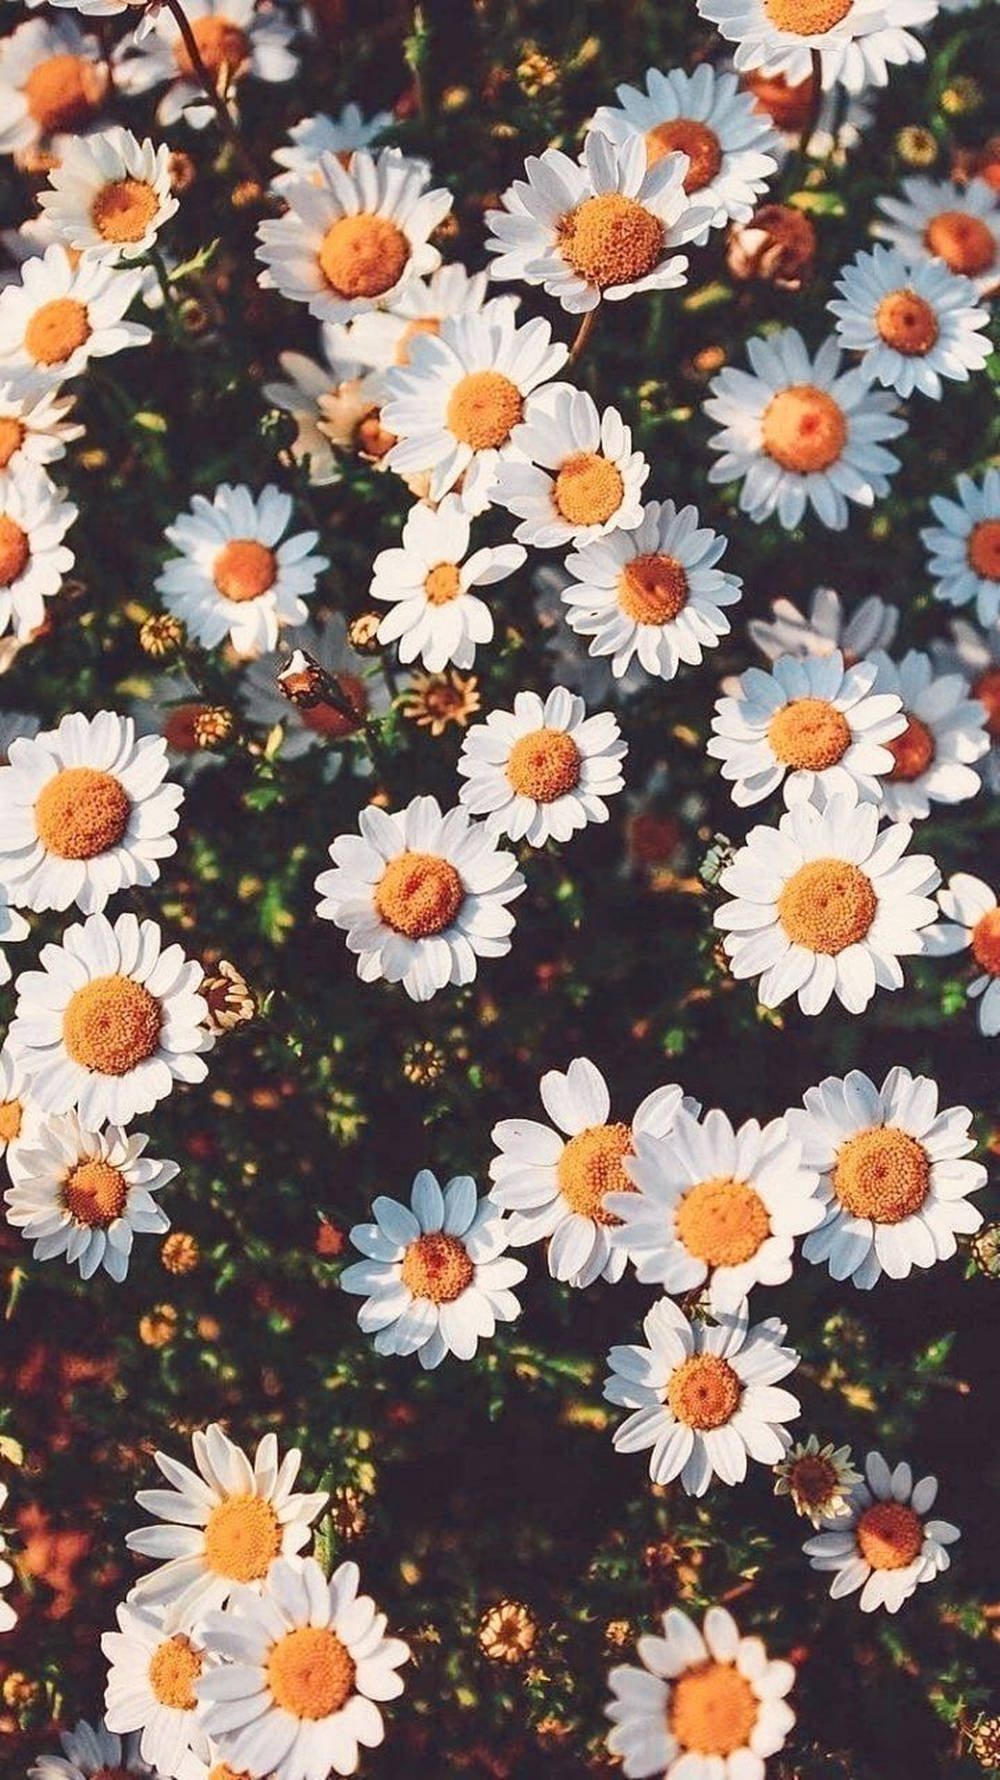 field of daisies wallpaper